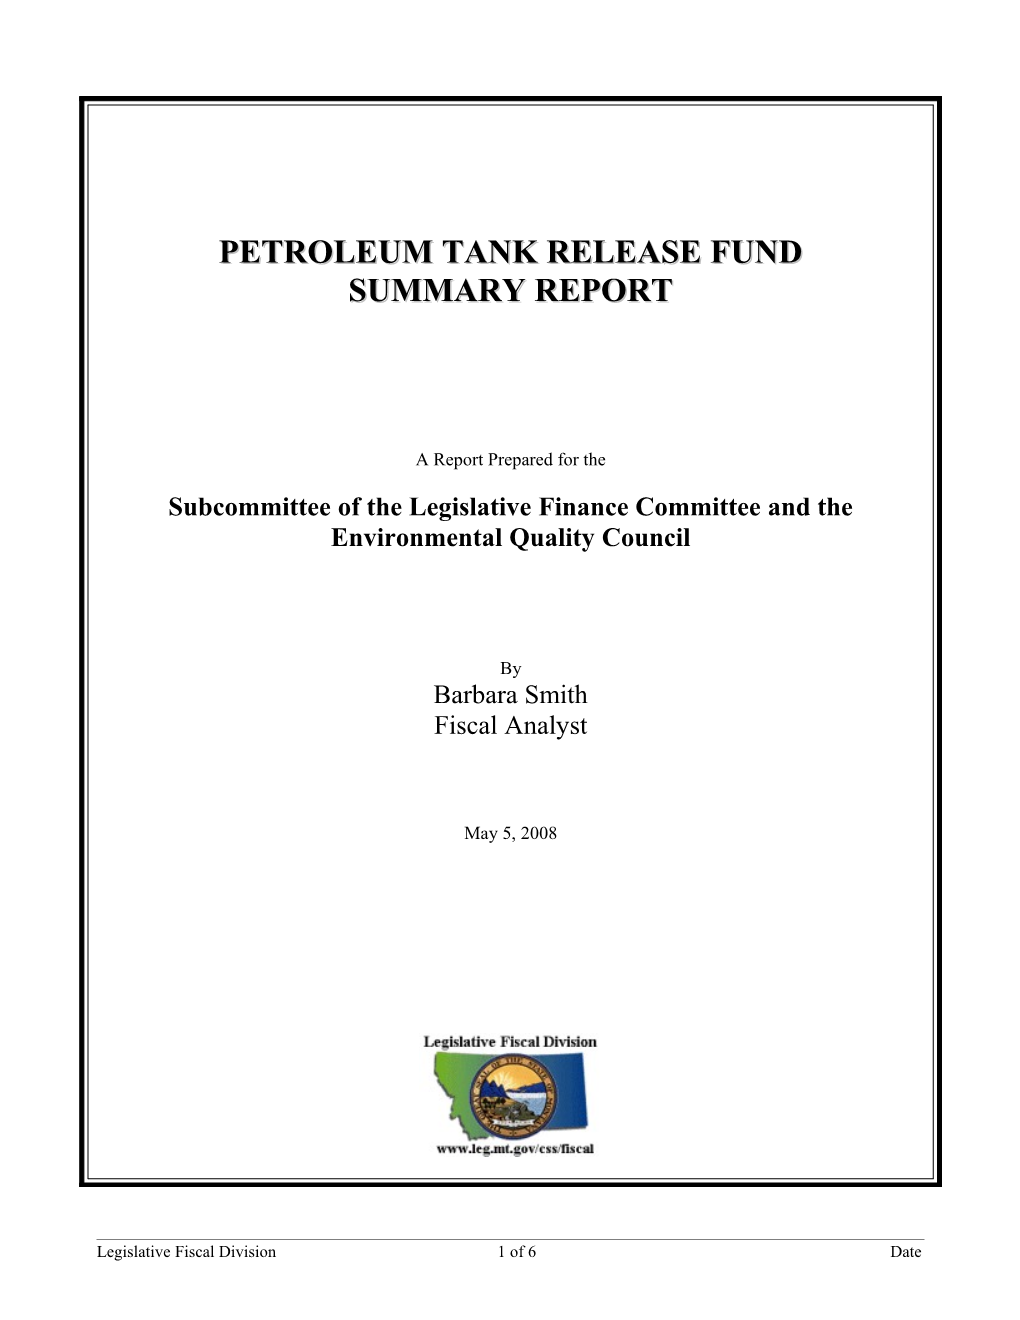 Petroleum Tank Release Fund